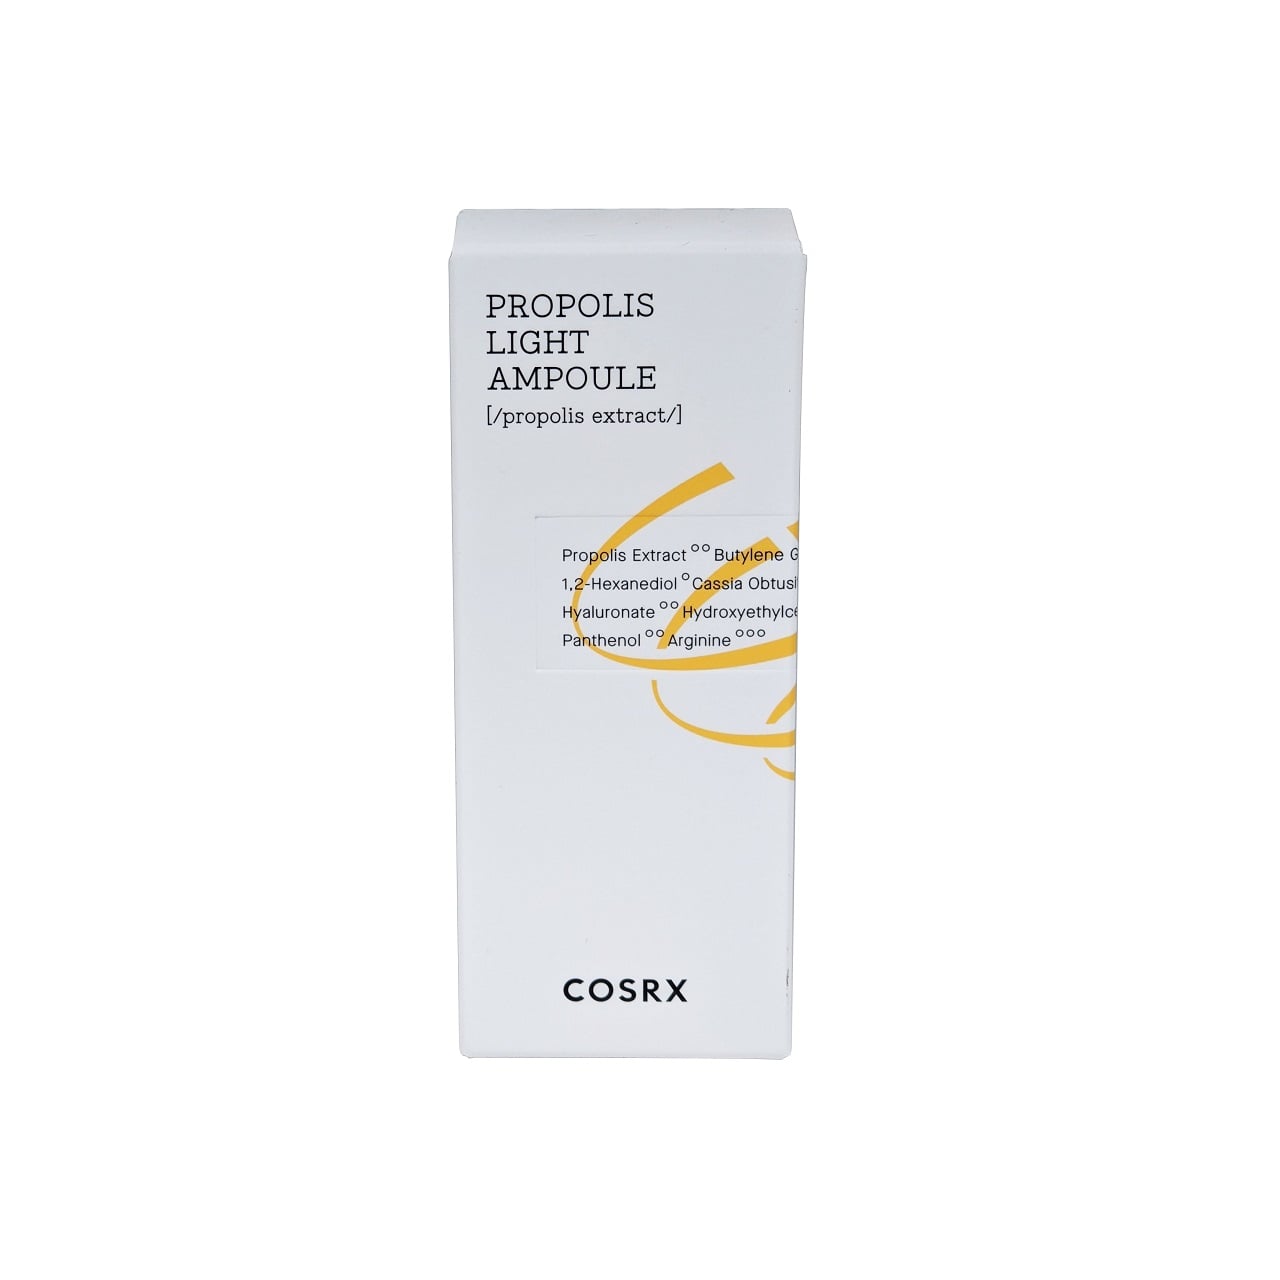 Product label for COSRX Full Fit Propolis Light Ampoule